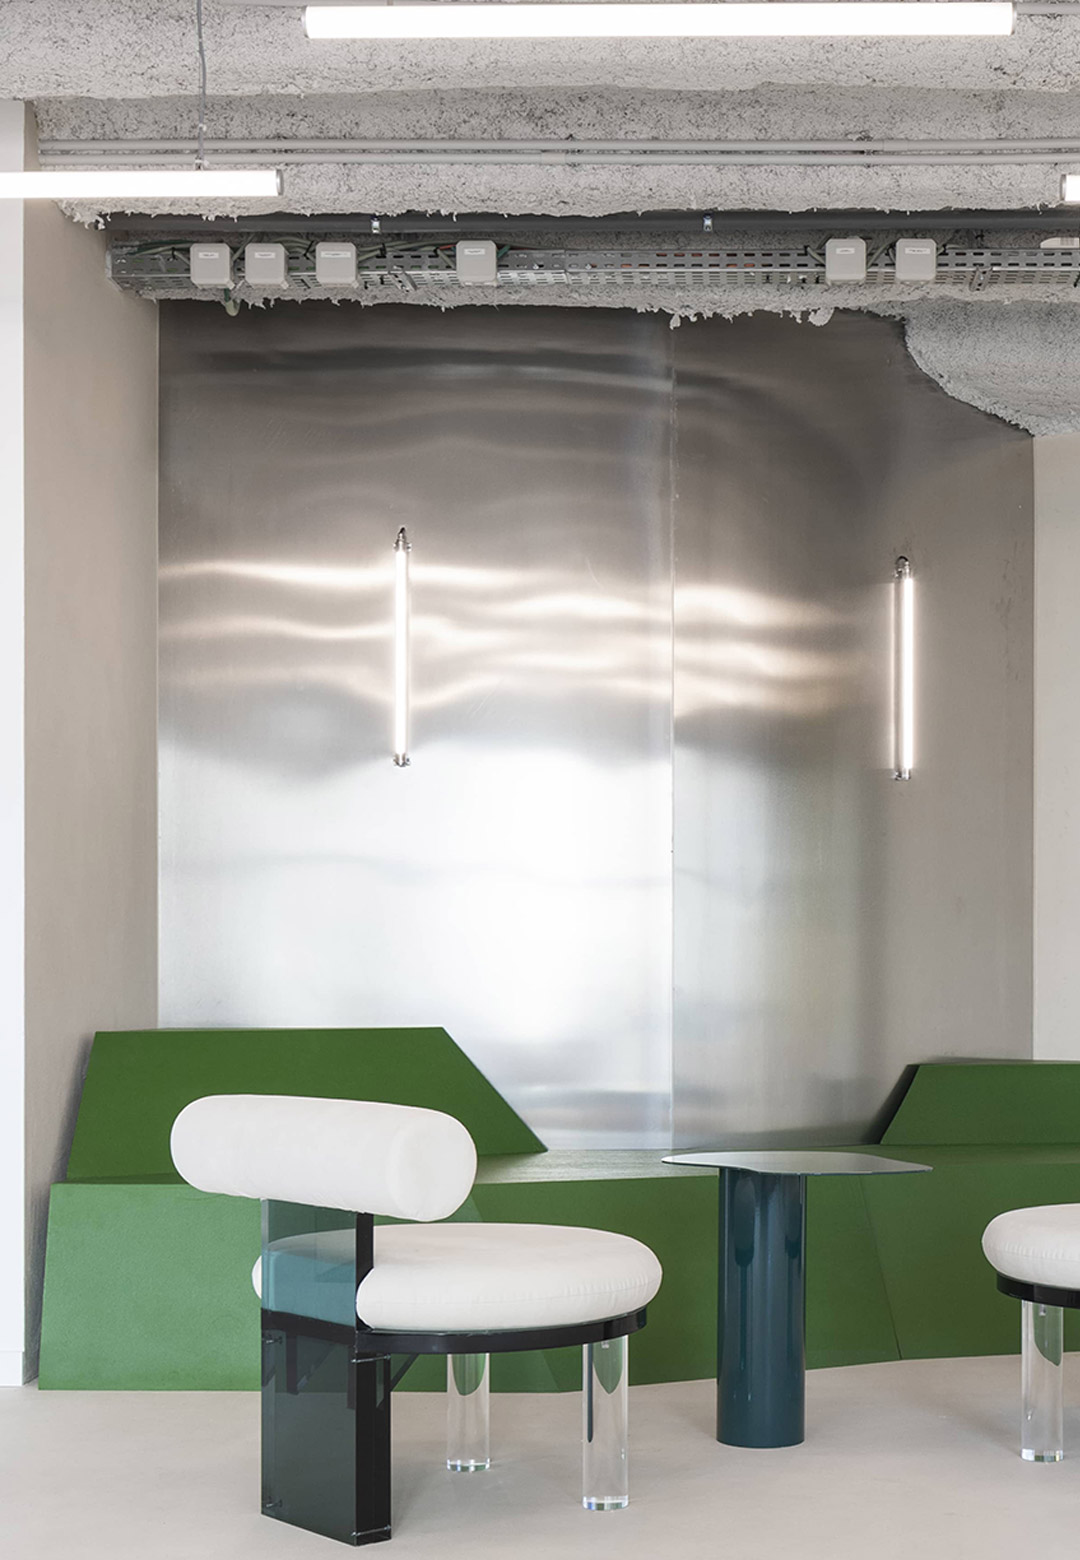 Cobra Studios channels neo-futuristic furniture design for a Brussels office